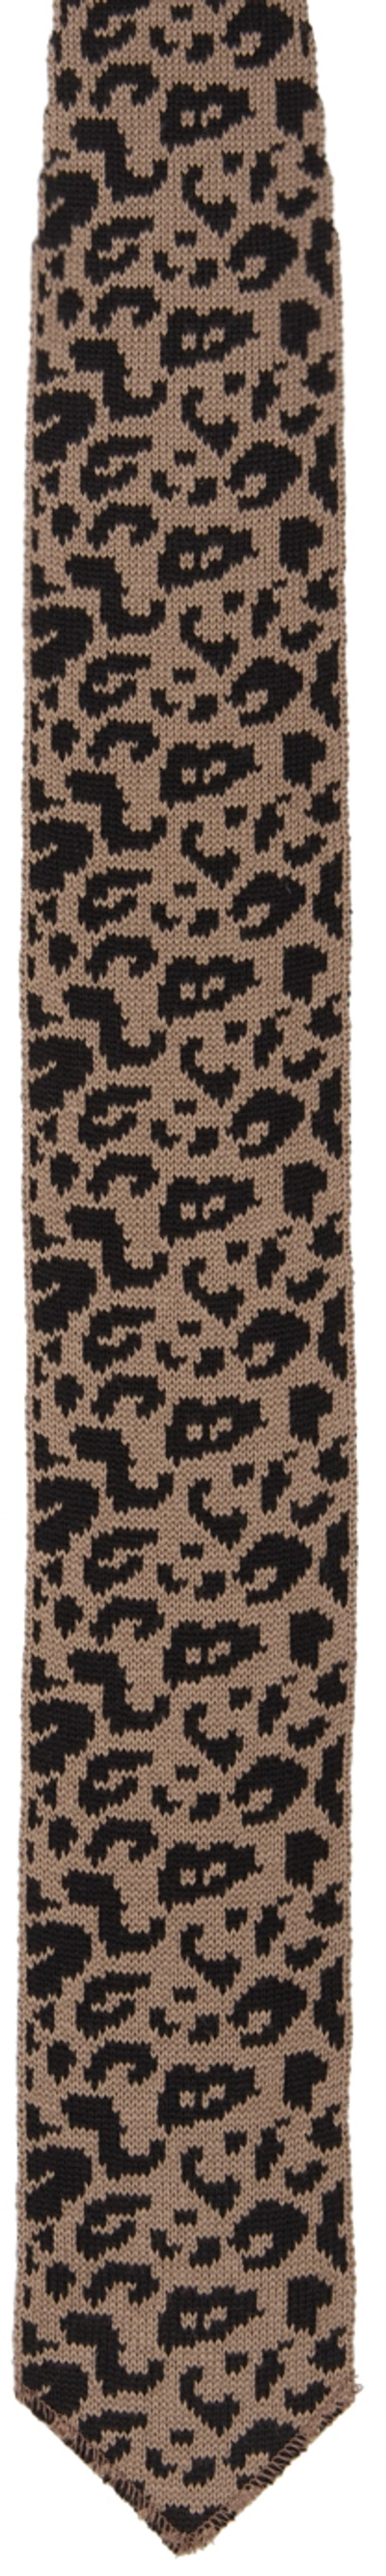 Engineered Garments Brown Leopard Jacquard Knit Tie